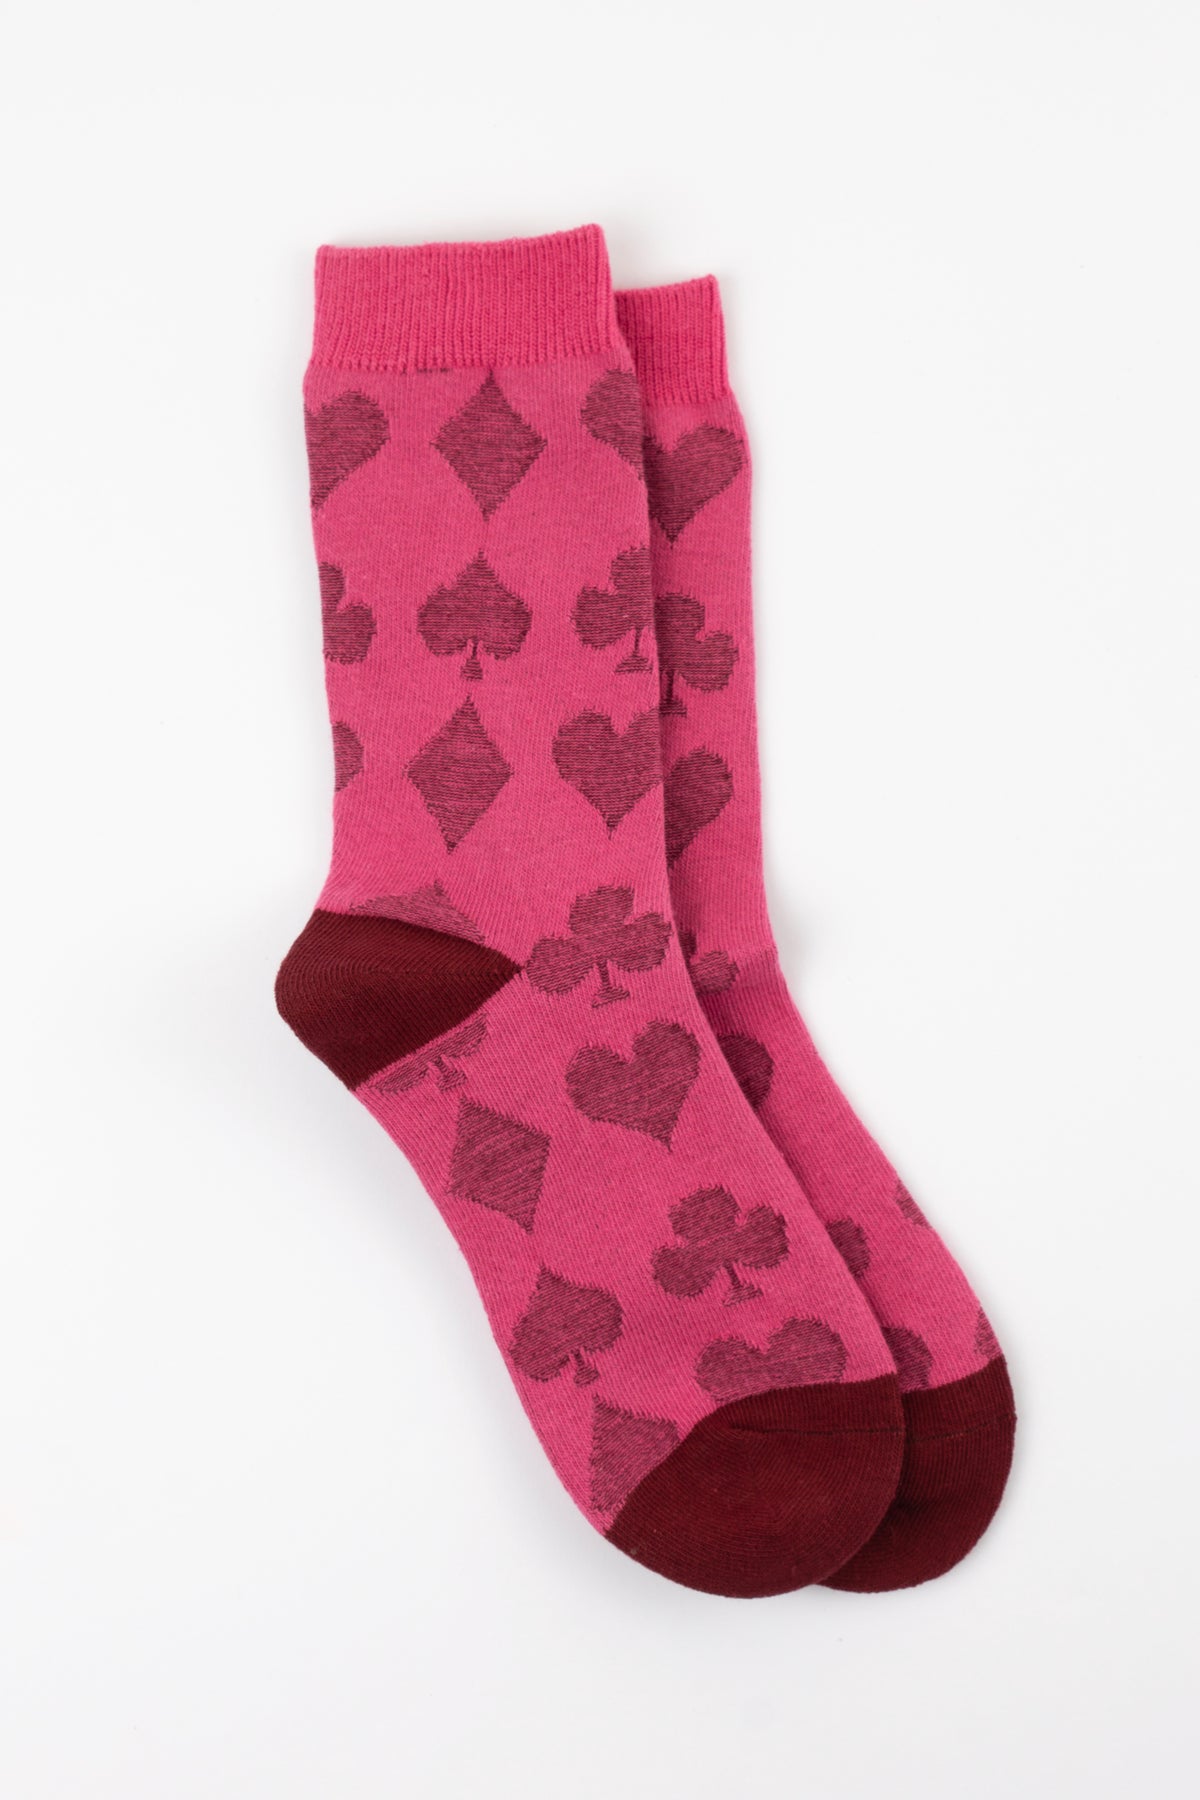 Hot Pink Deck Of Cards Socks